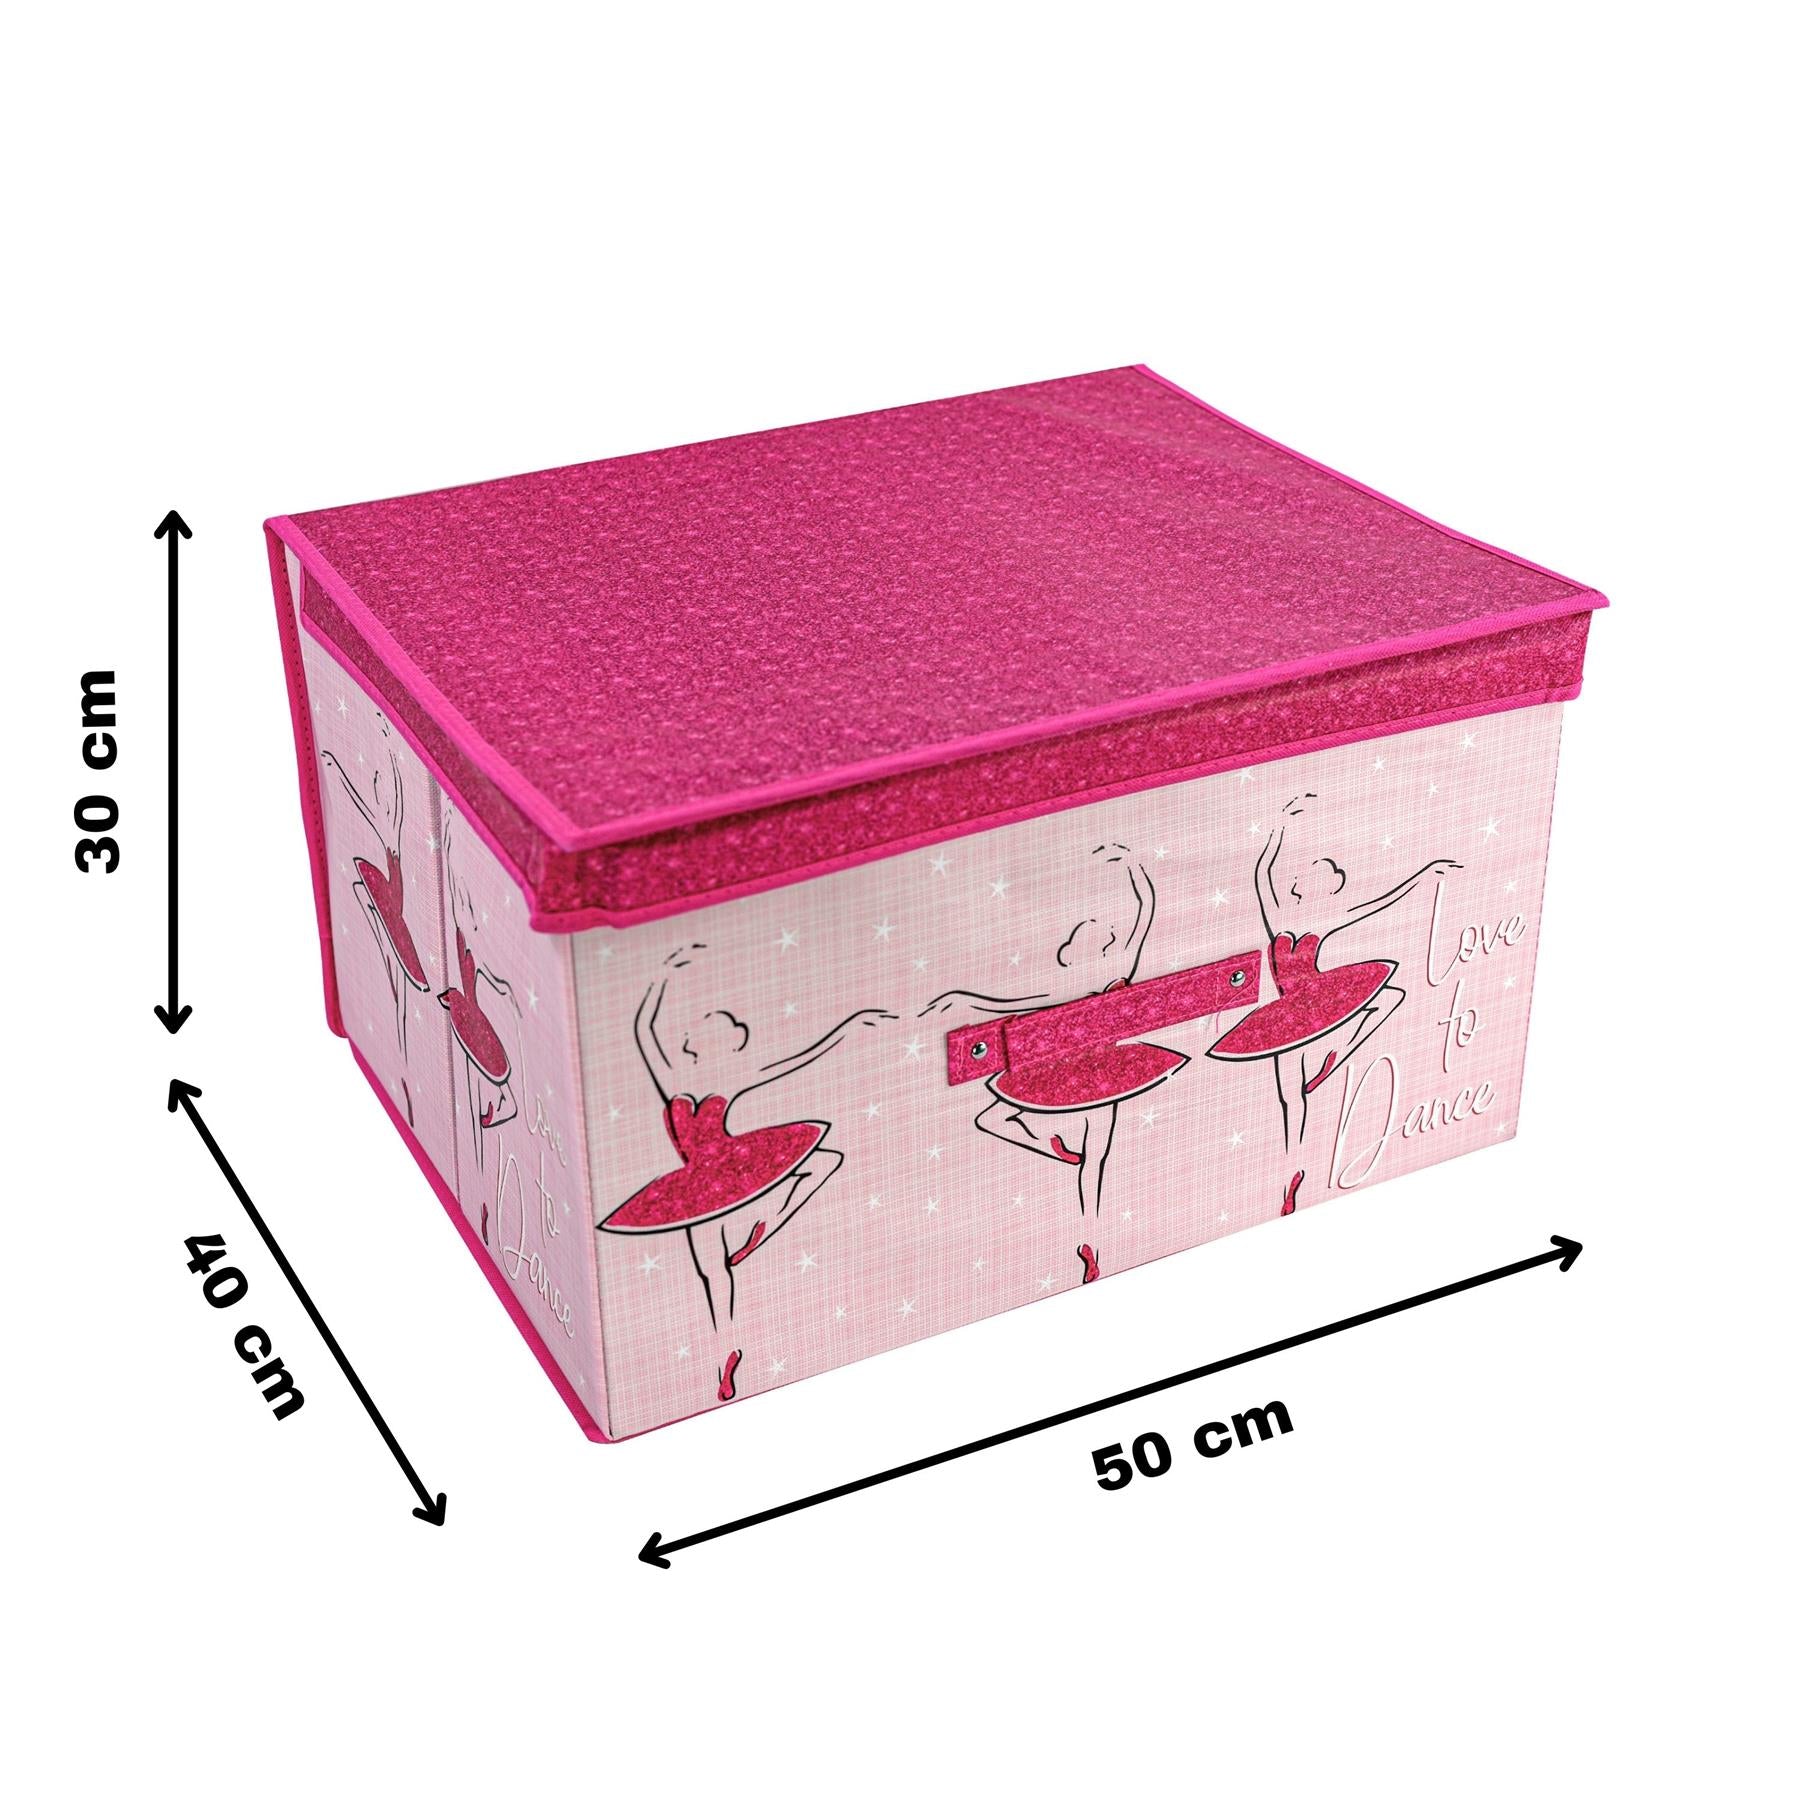 Ballerina Storage Box by The Magic Toy Shop - UKBuyZone